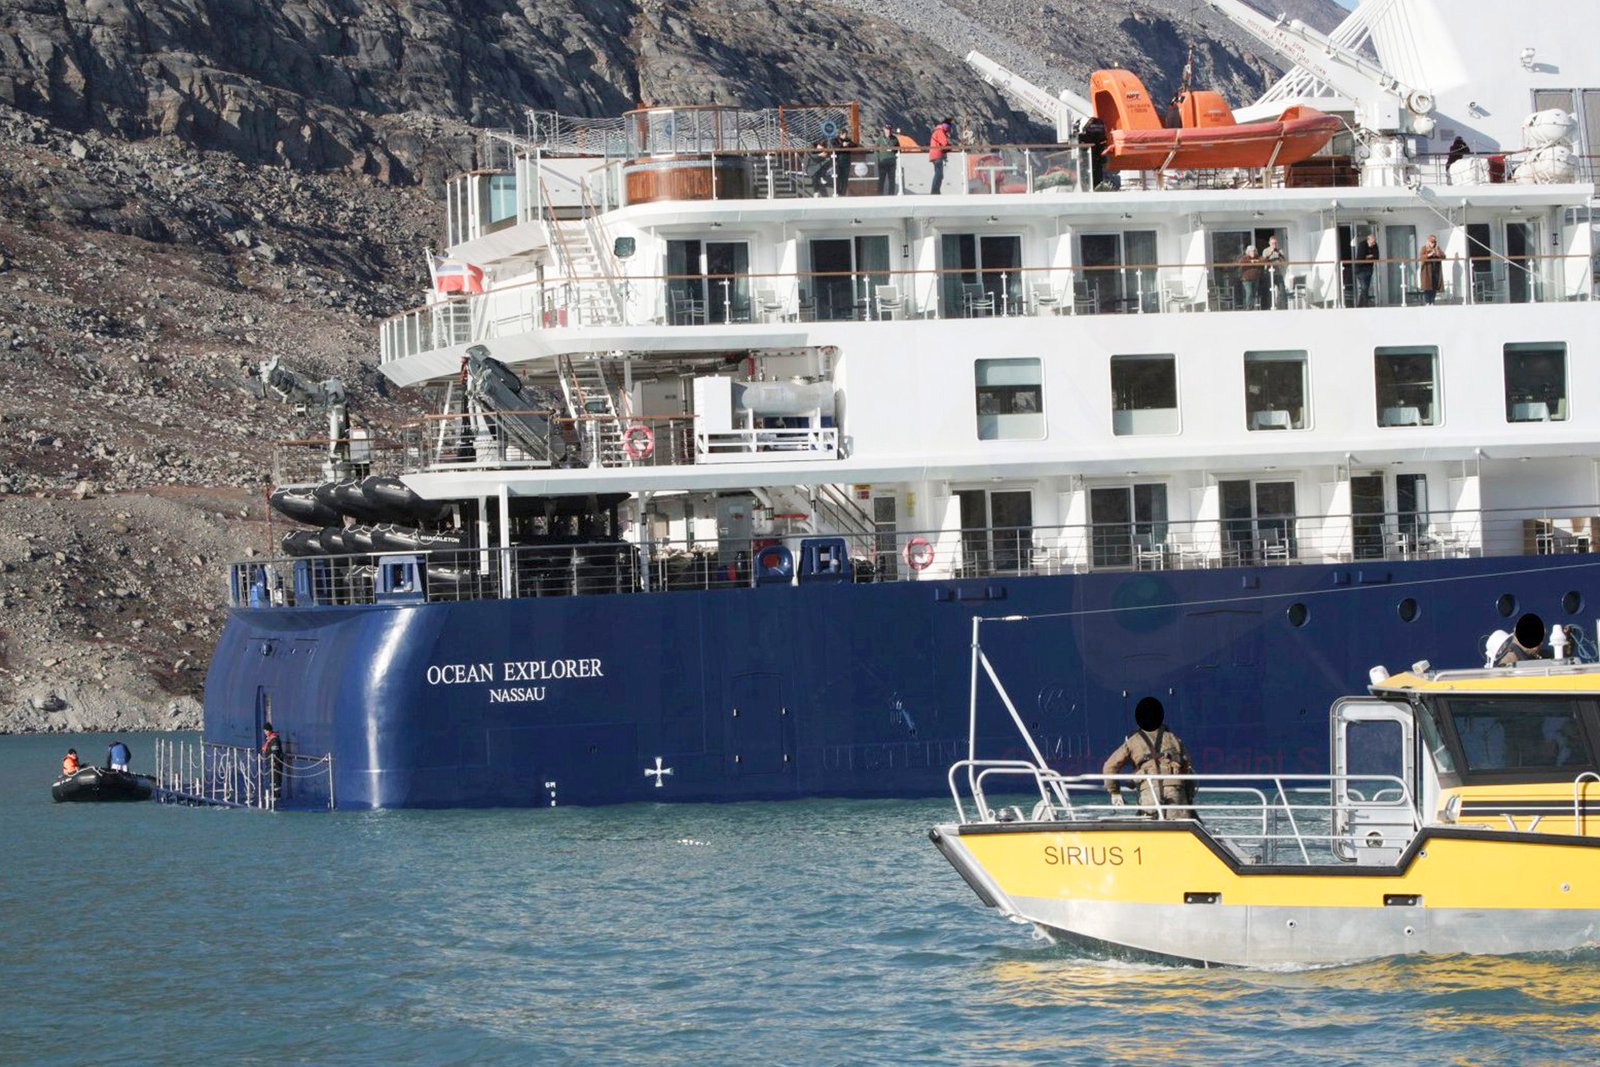 Luxury Cruise Ship with 200+ Passengers Stuck